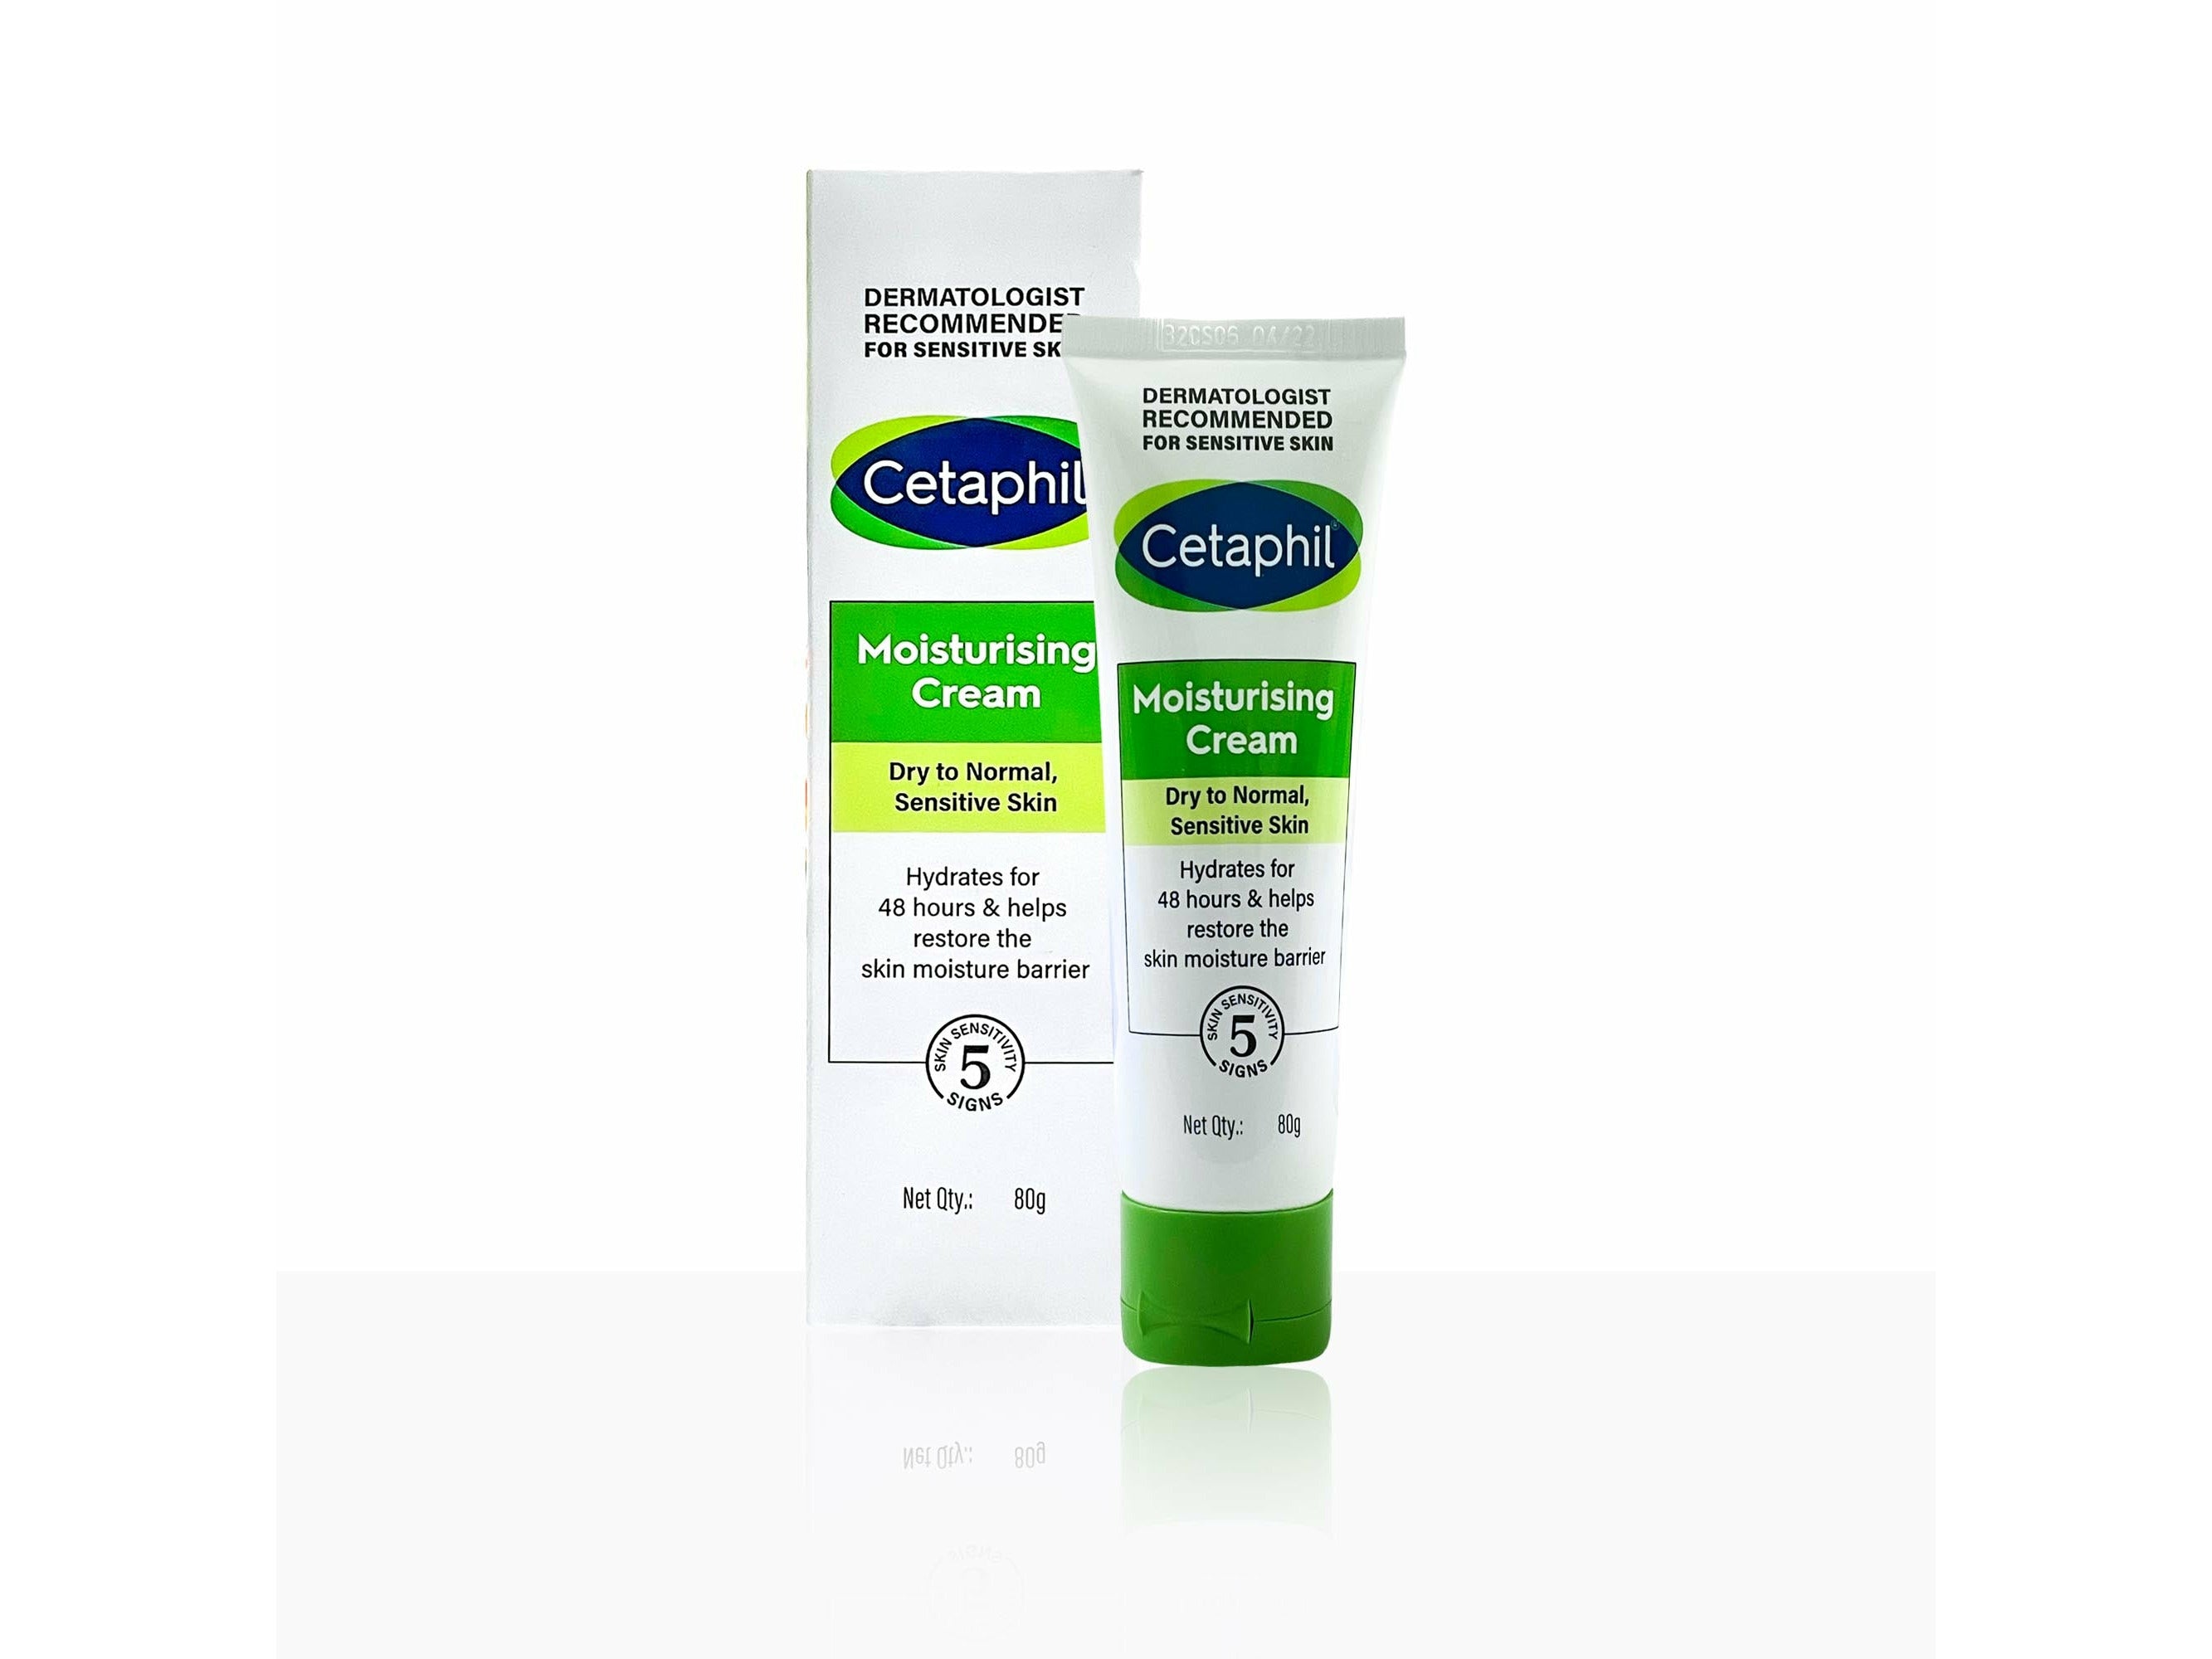 Cetaphil Moisturising Cream (Dry to Normal, Sensitive Skin) - Clinikally